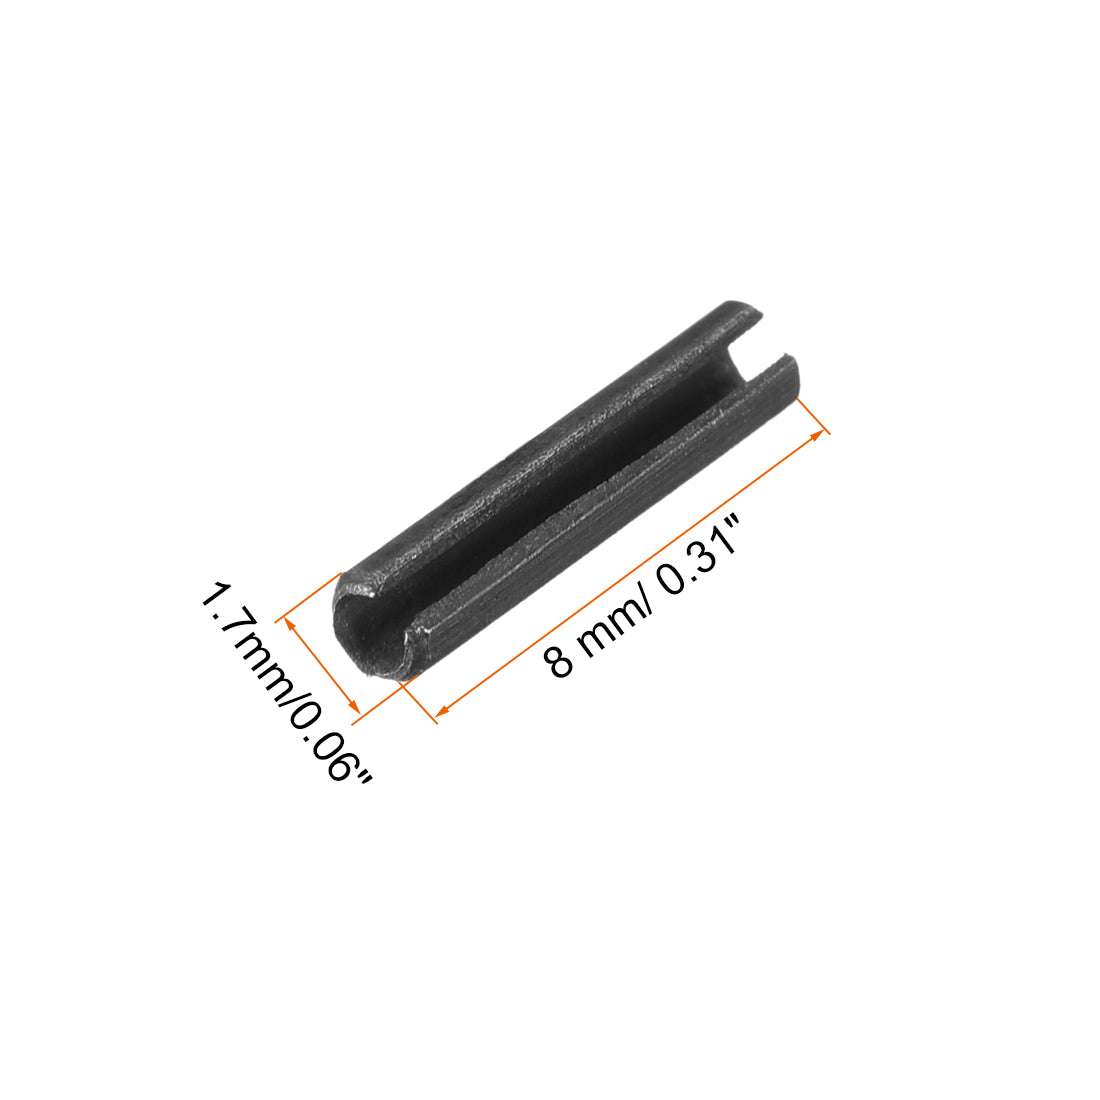 Uxcell Uxcell 1.7mm x 8mm Dowel Pin Carbon Steel Split Spring Roll Shelf Support Pin Fasten Hardware Black 50 Pcs